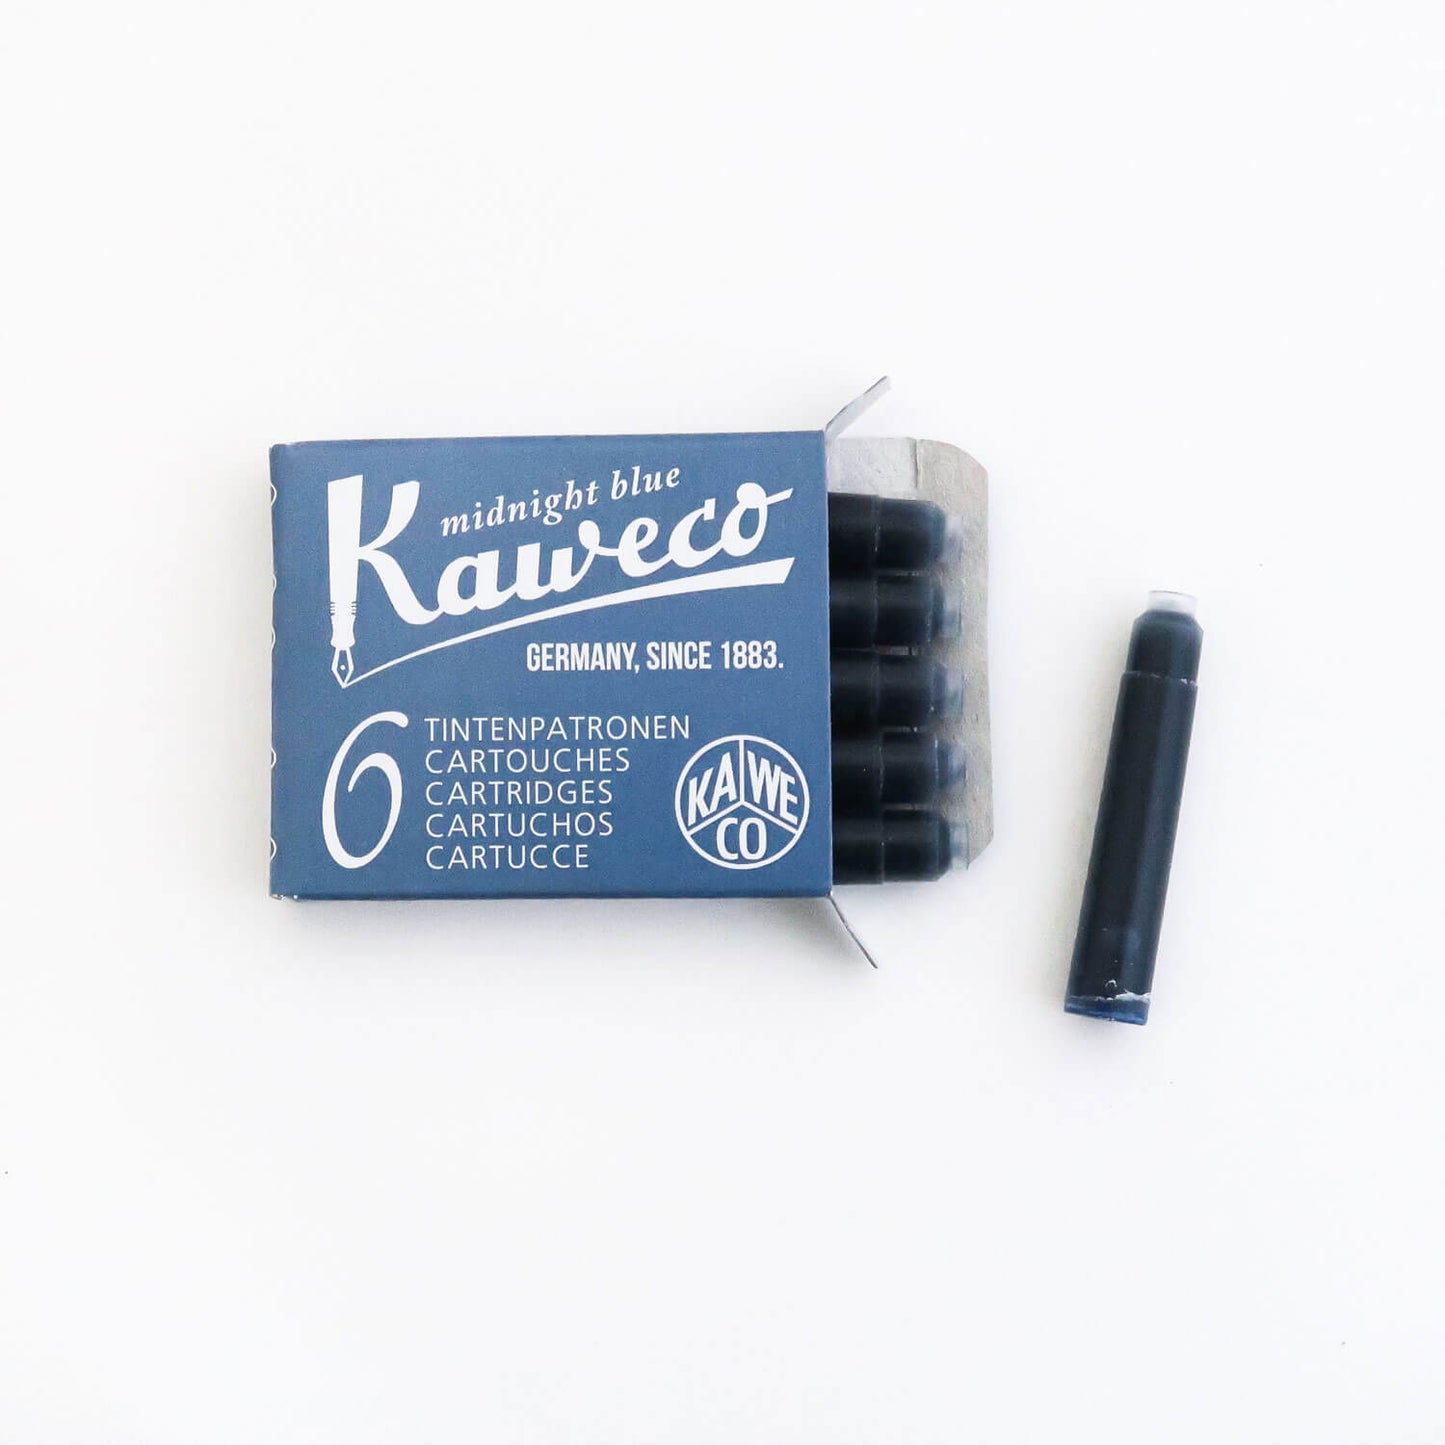 Kaweco Ink Cartridge Refill/ 6 pc